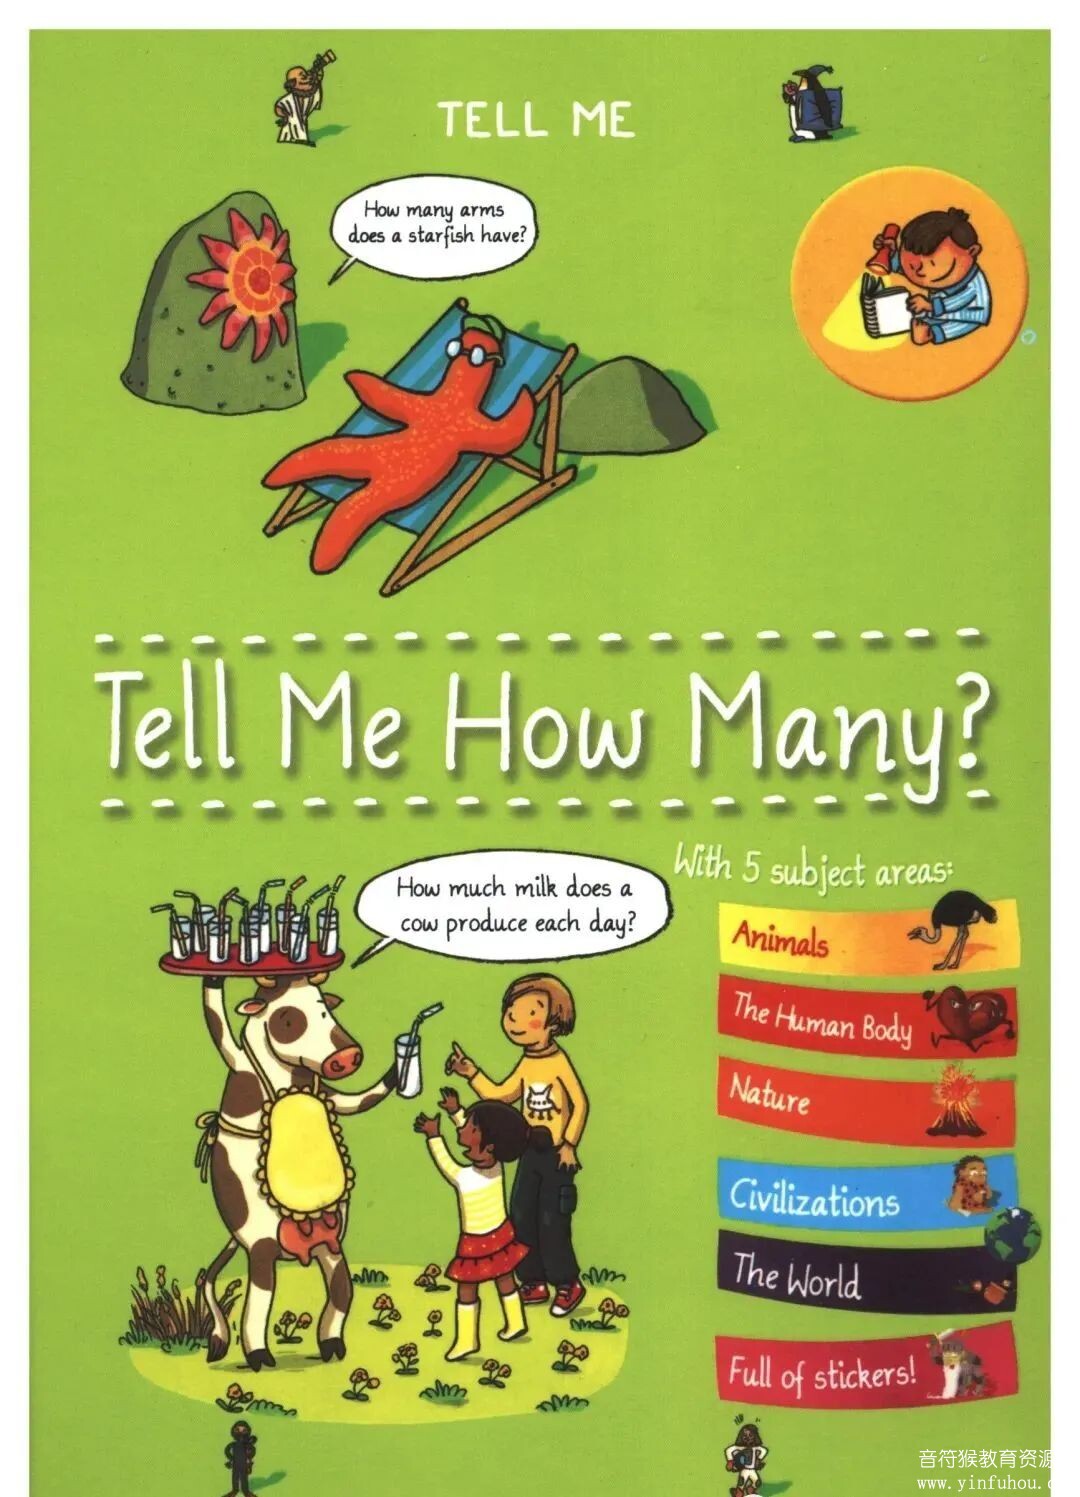 Tell me 儿童英文科普书 单有趣的语言帮孩子们答疑解惑